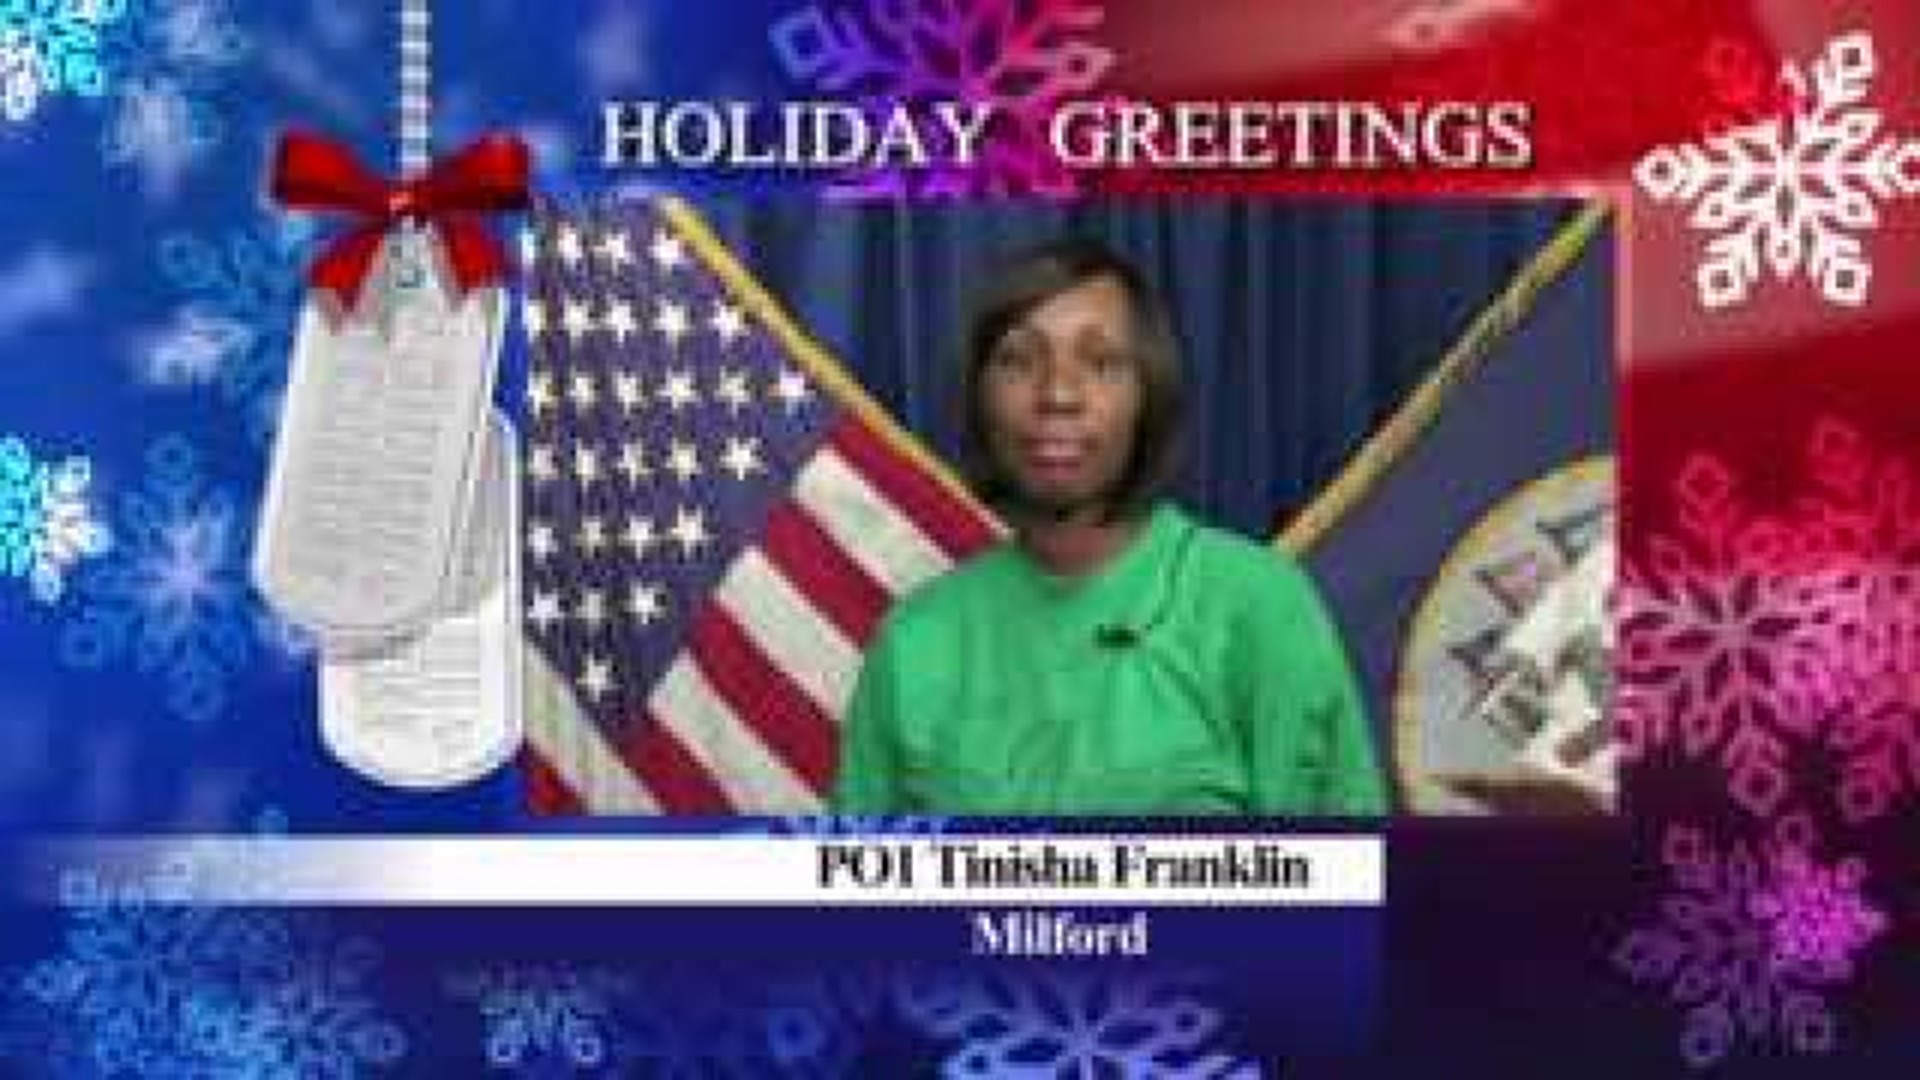 Military Greeting: PO1 Tinisha Franklin